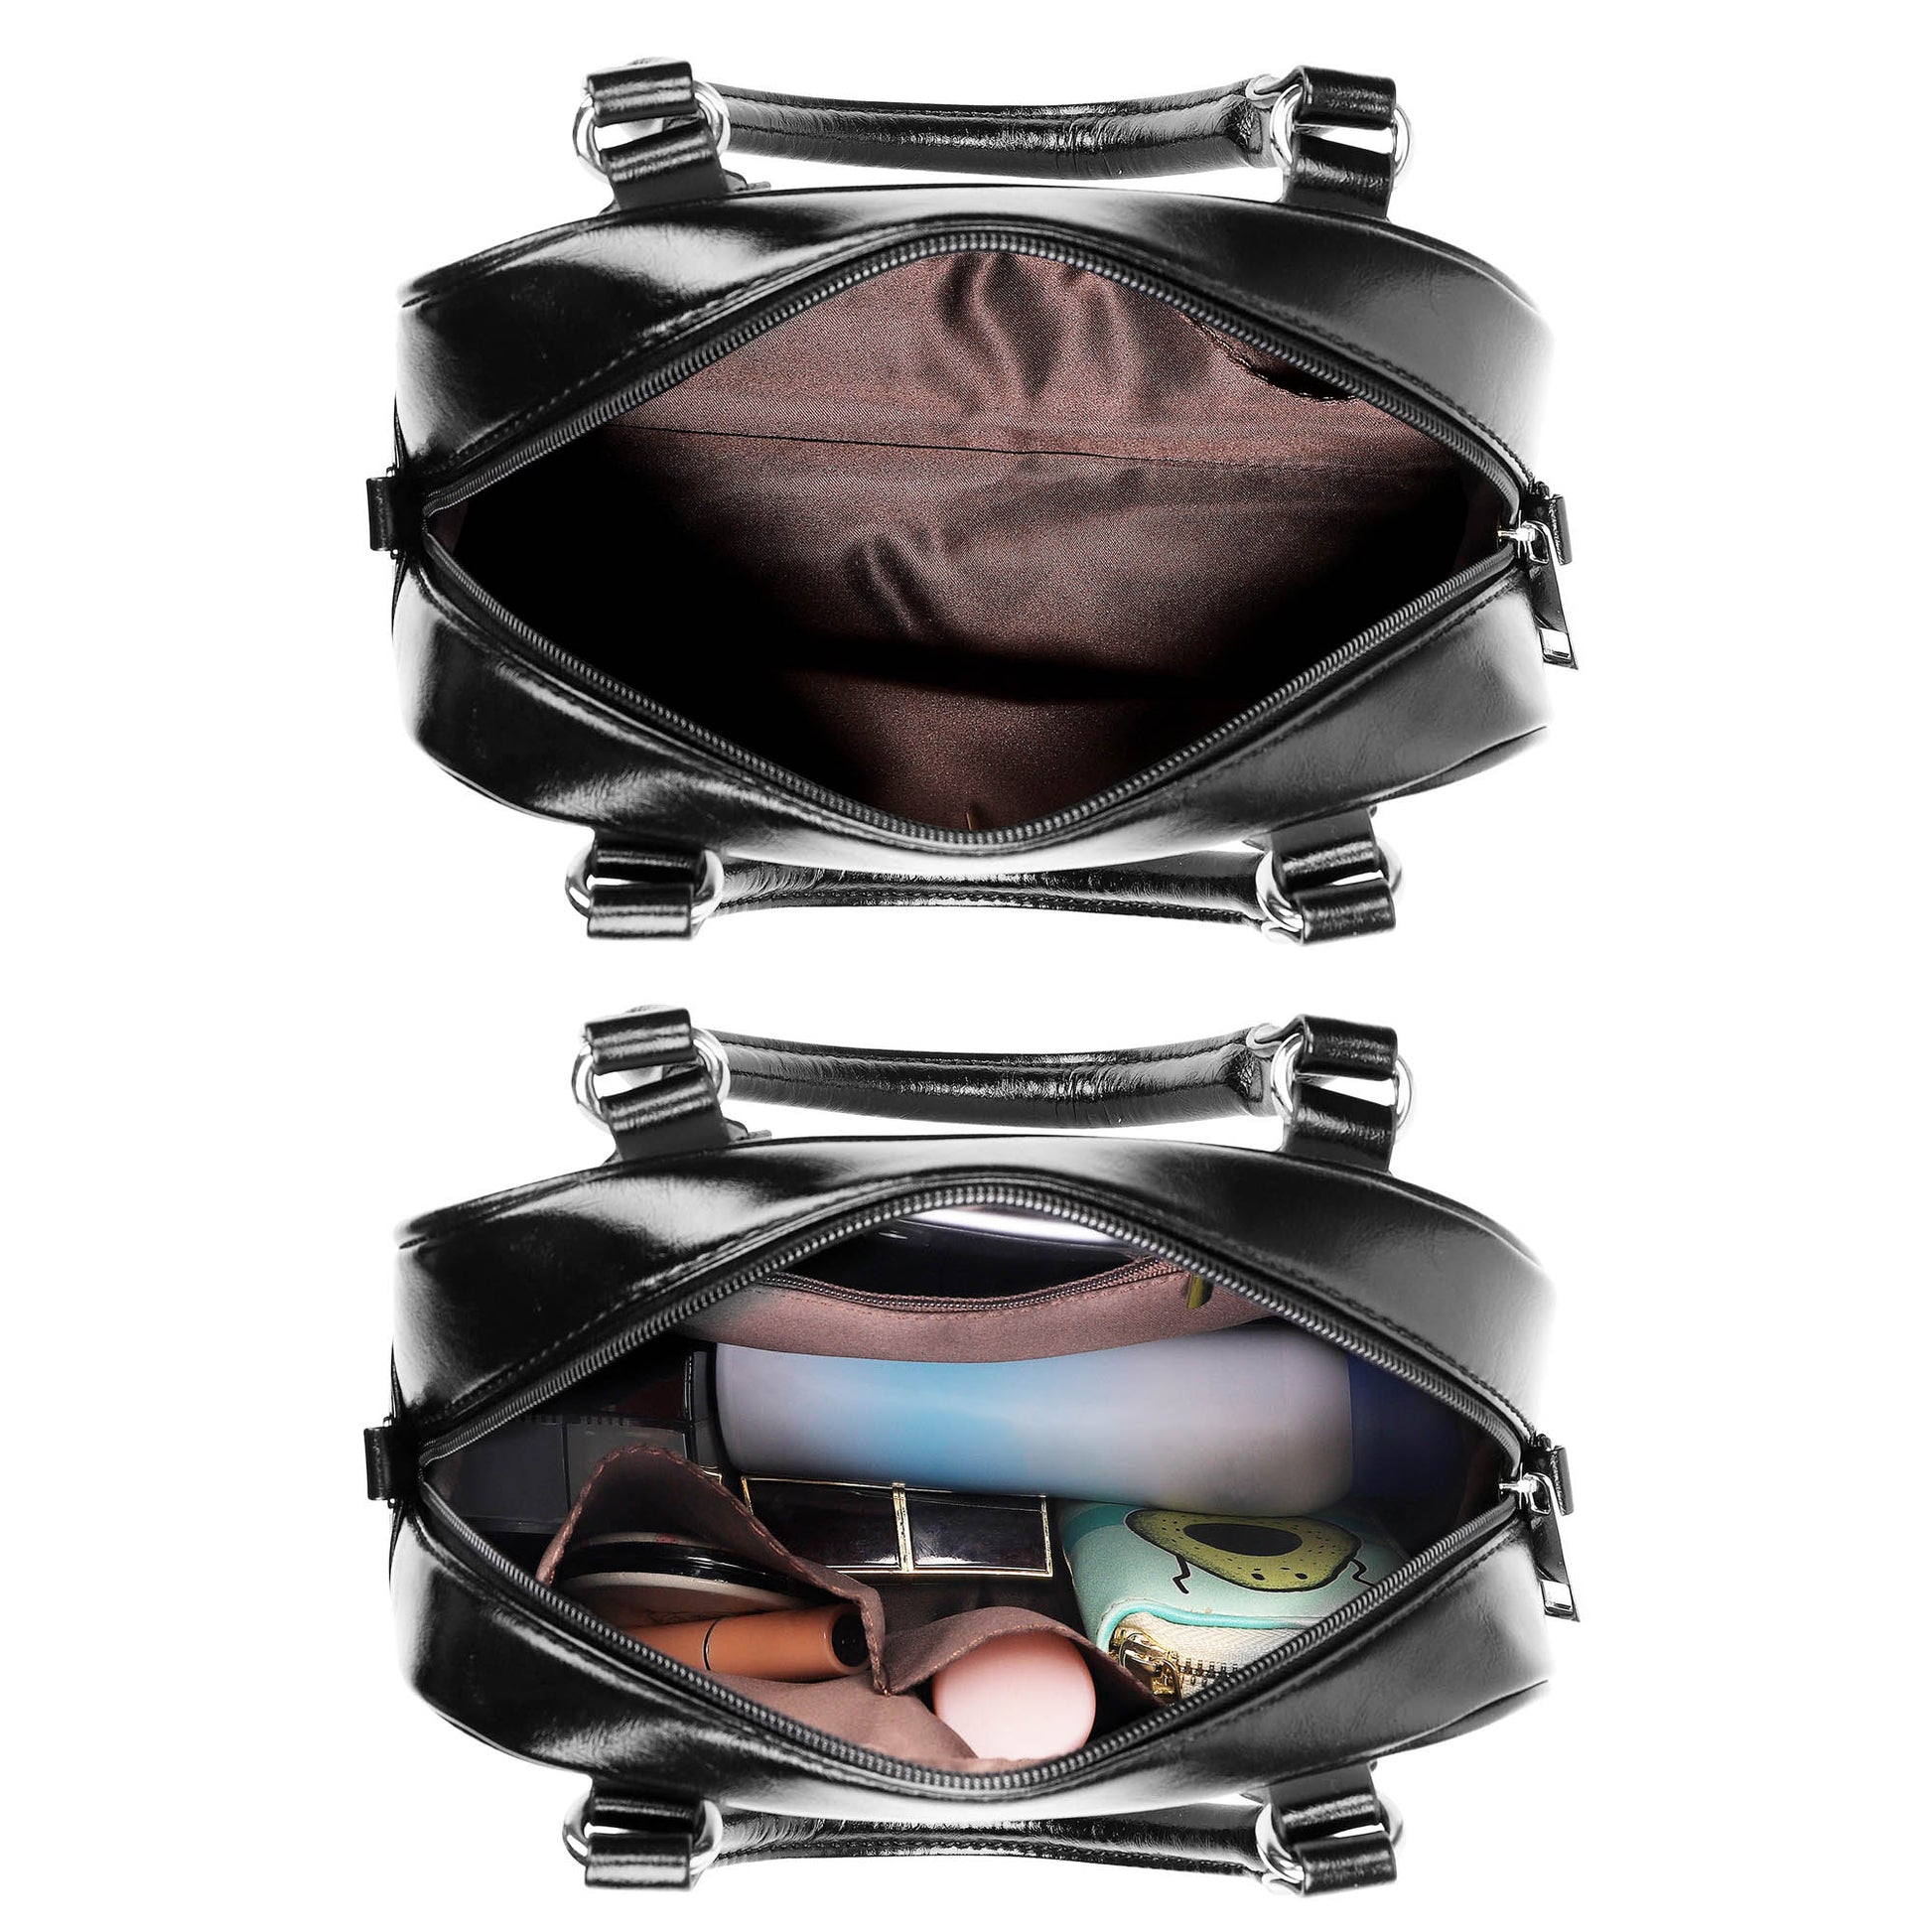 Brodie Tartan Shoulder Handbags - Tartanvibesclothing